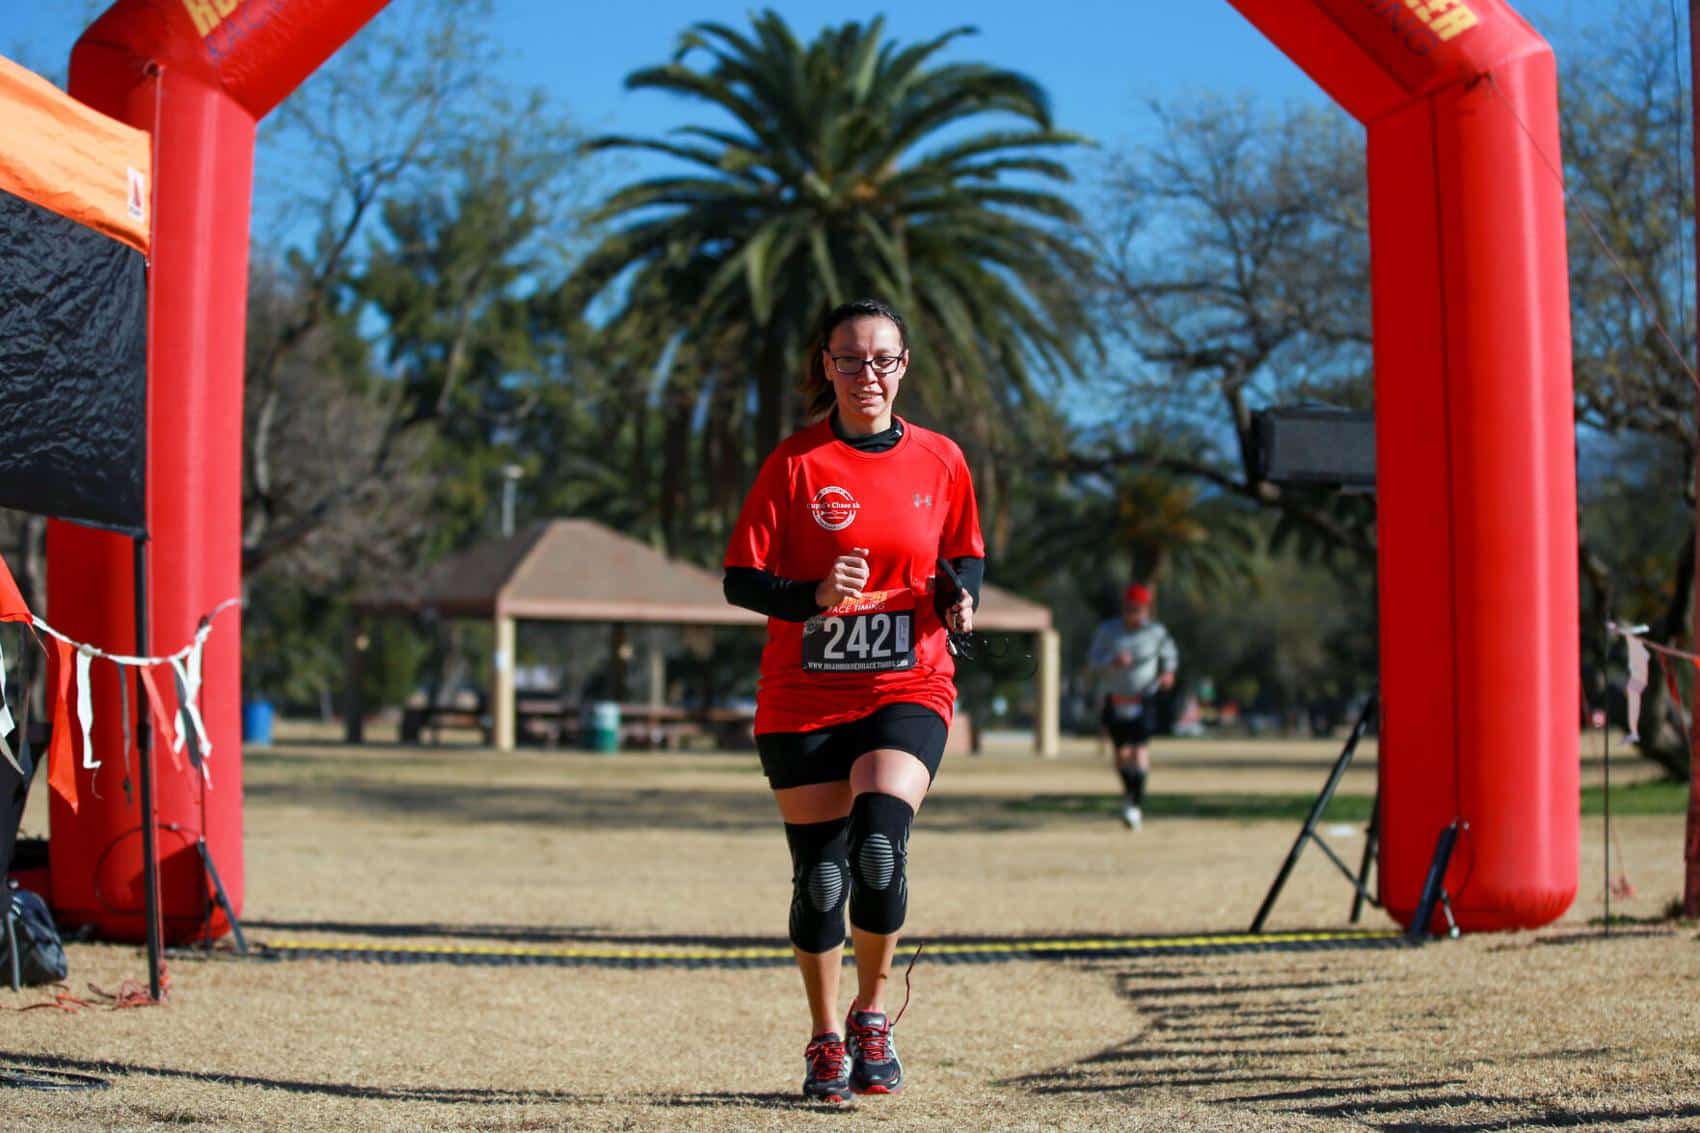 Laura Pina crosses the finish line for the Cupid's Chase 5K Run on February 12, 2022 at Reid Park. Ana Beltran, Arizona Daily Star - tucson.com